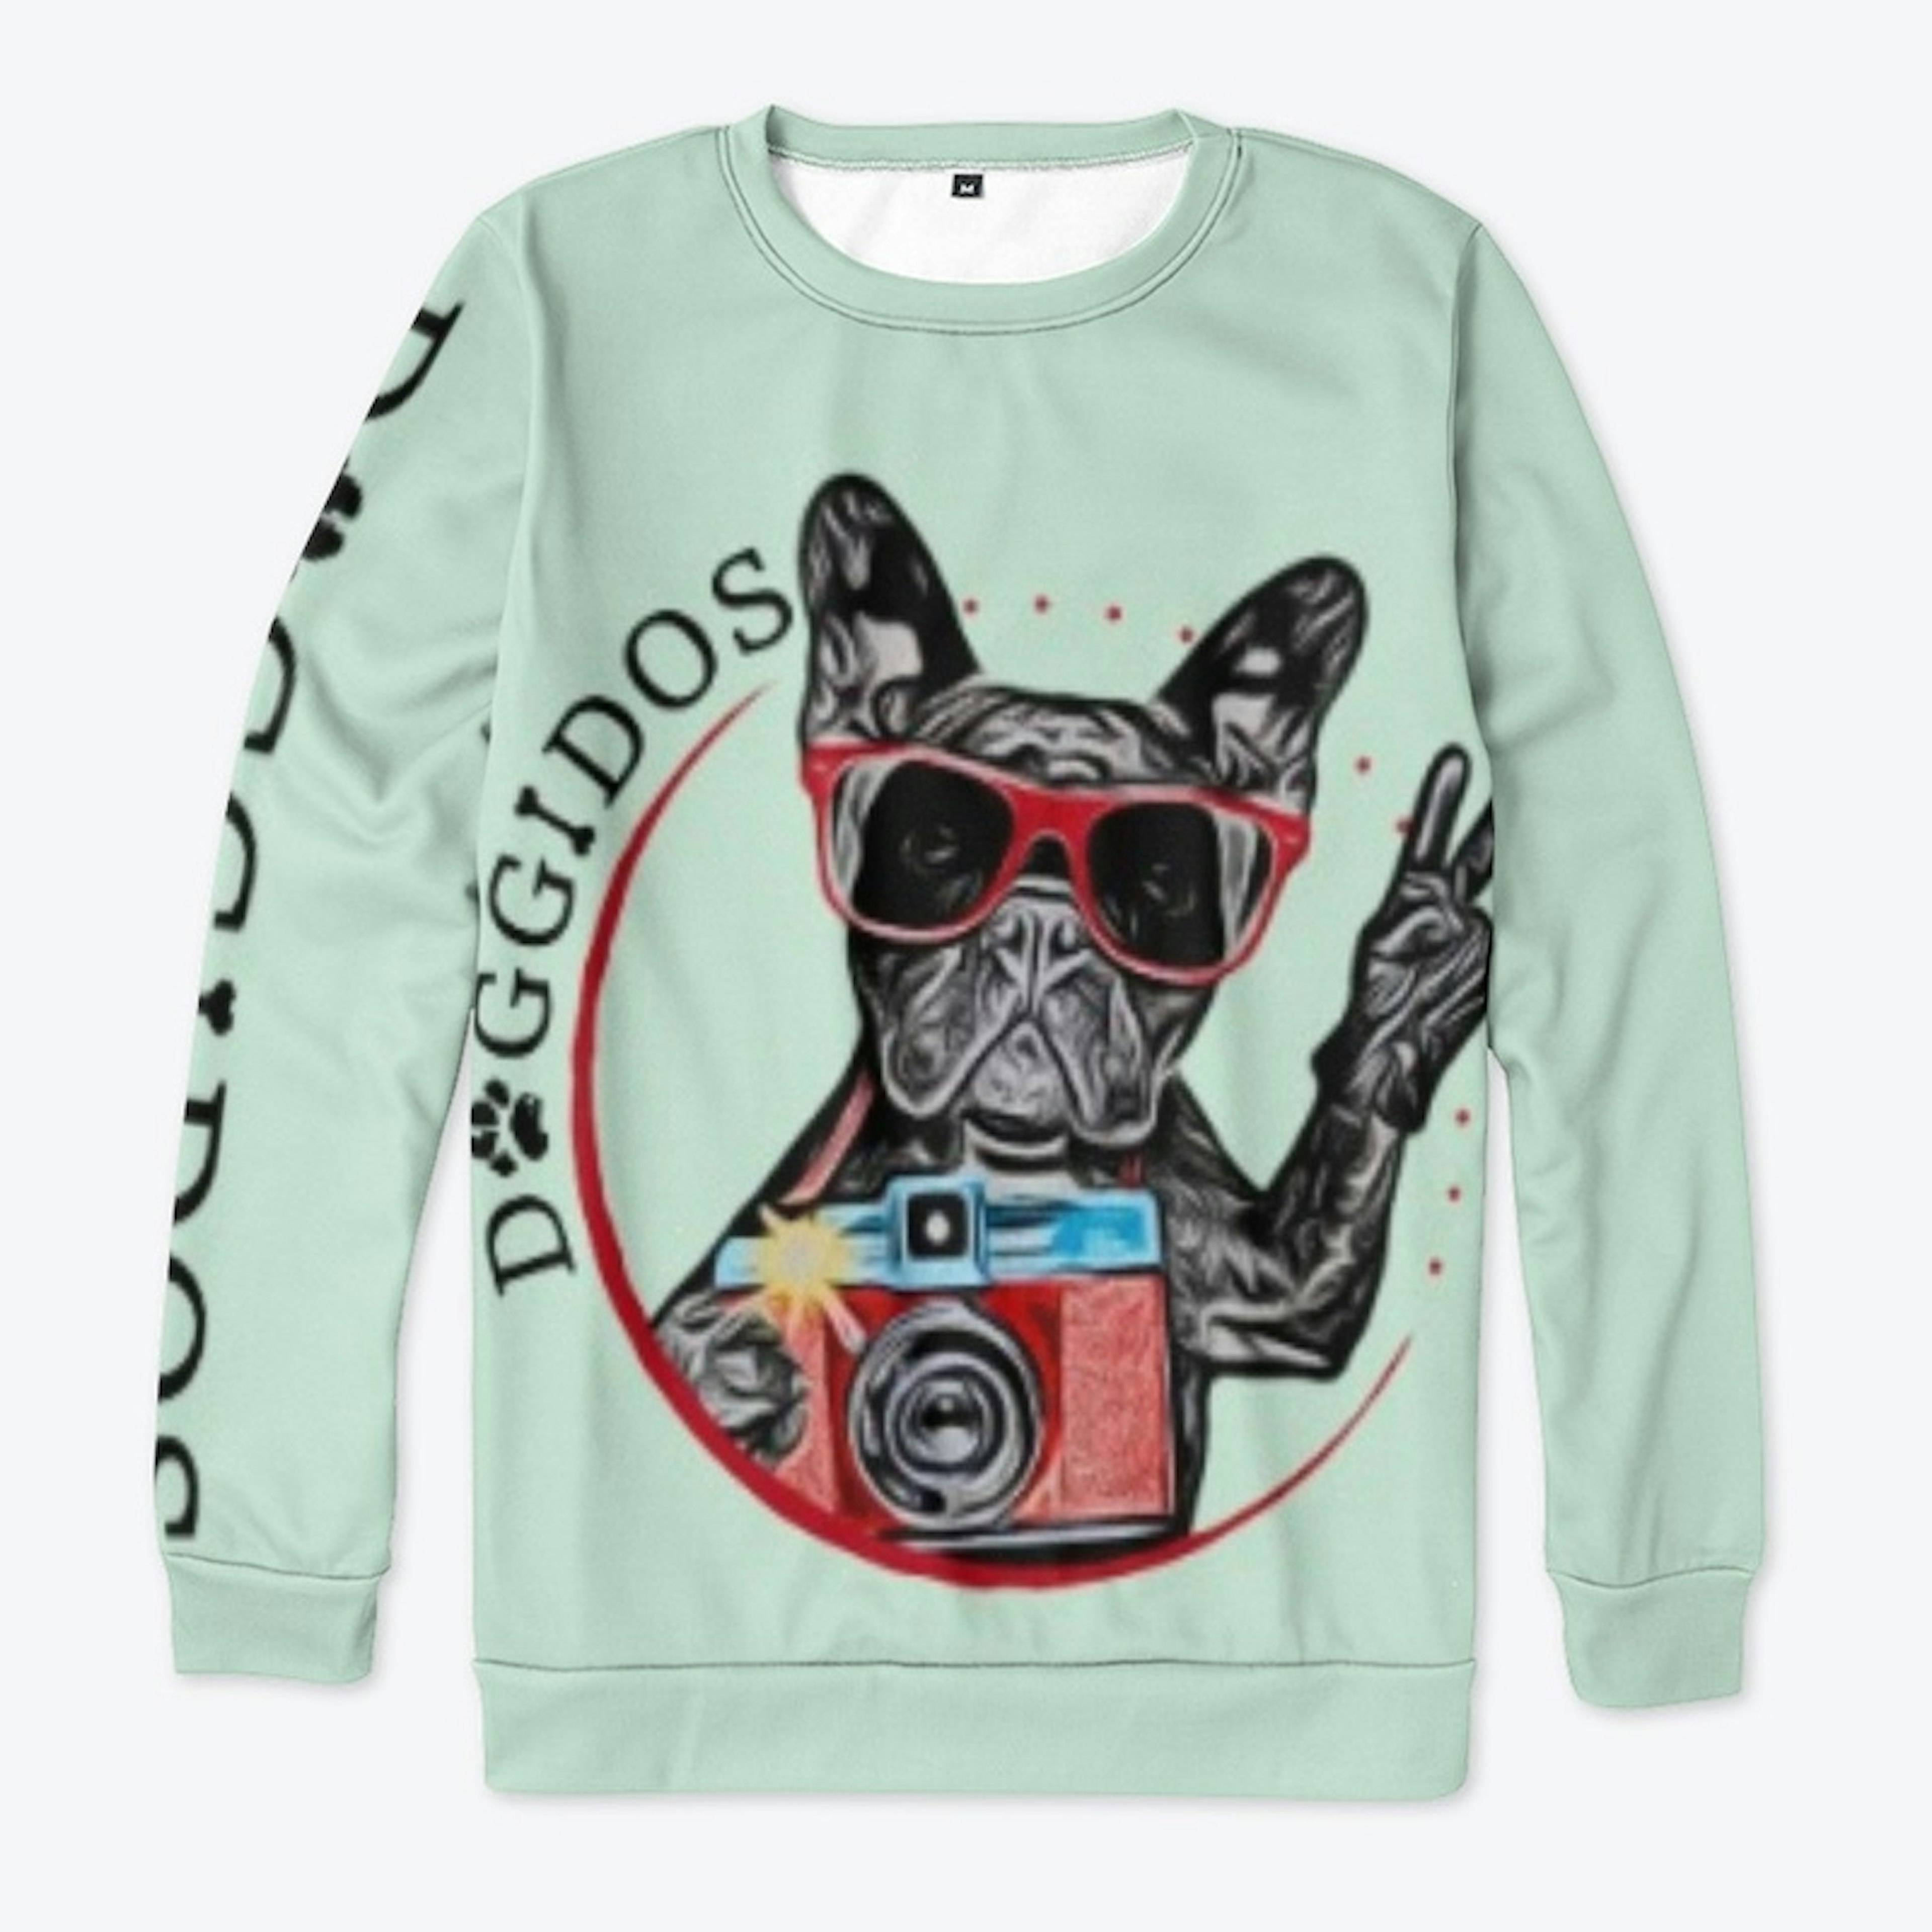 Doggidos Graphic Tee 4